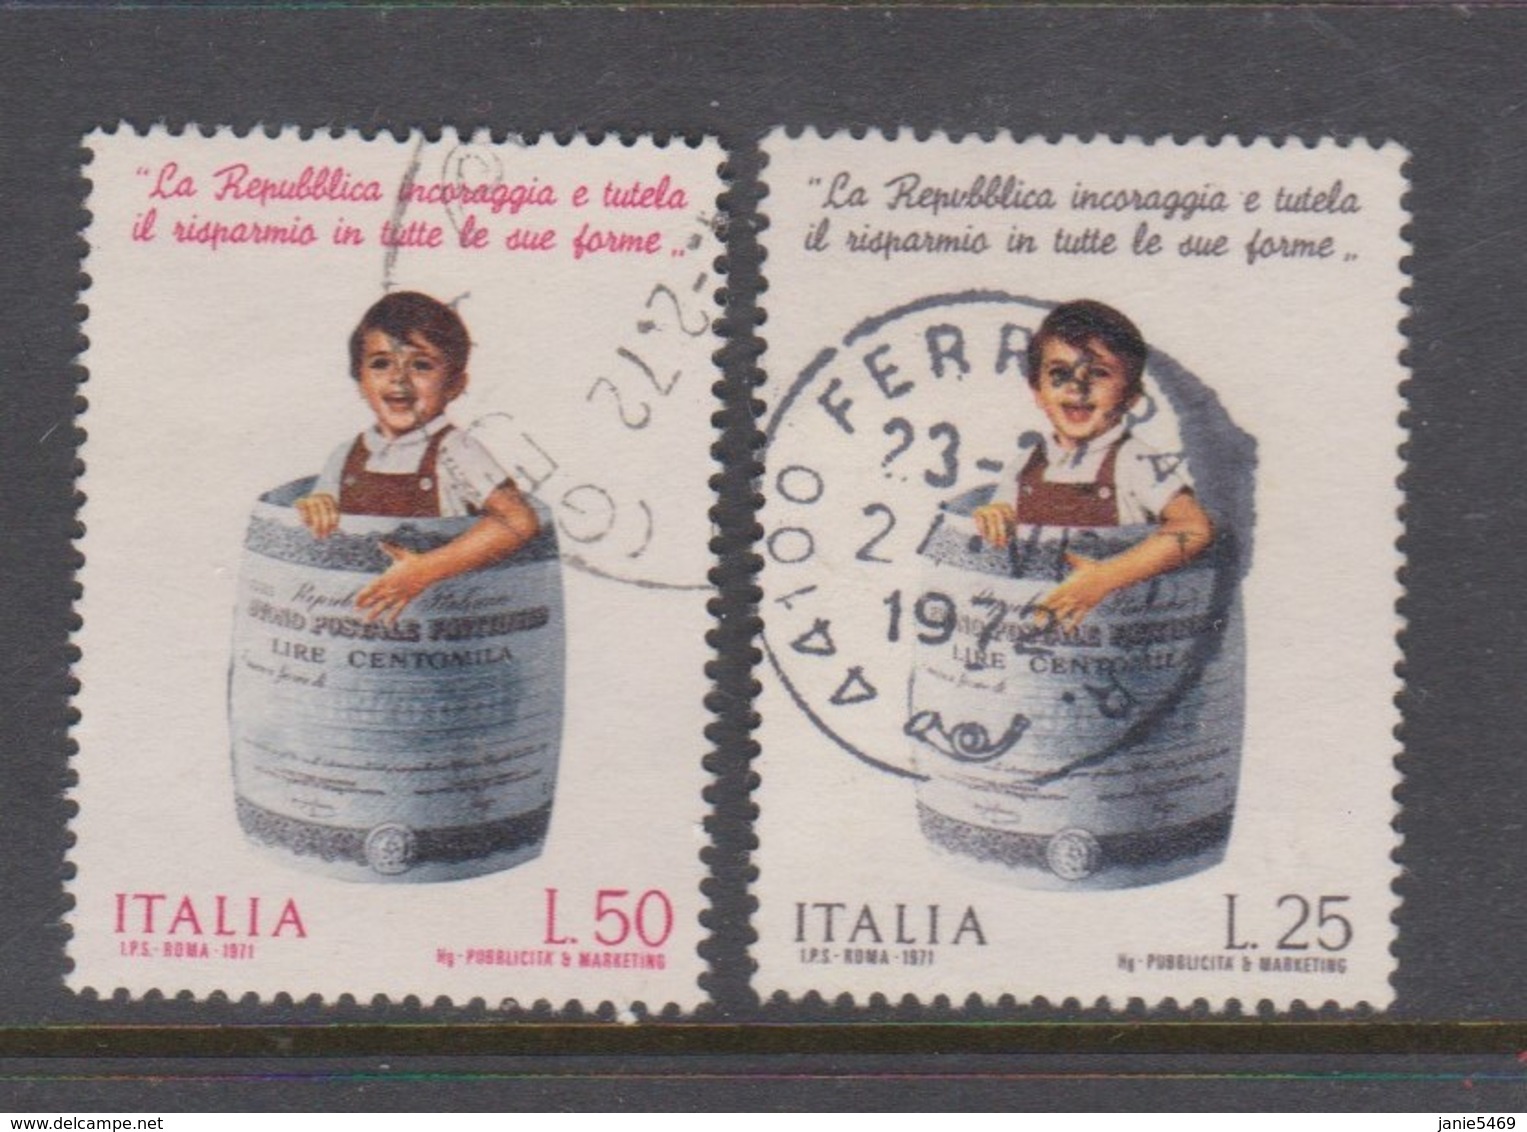 Italy Republic S 1159-1160 1971 Postal Savings,used - 1971-80: Used